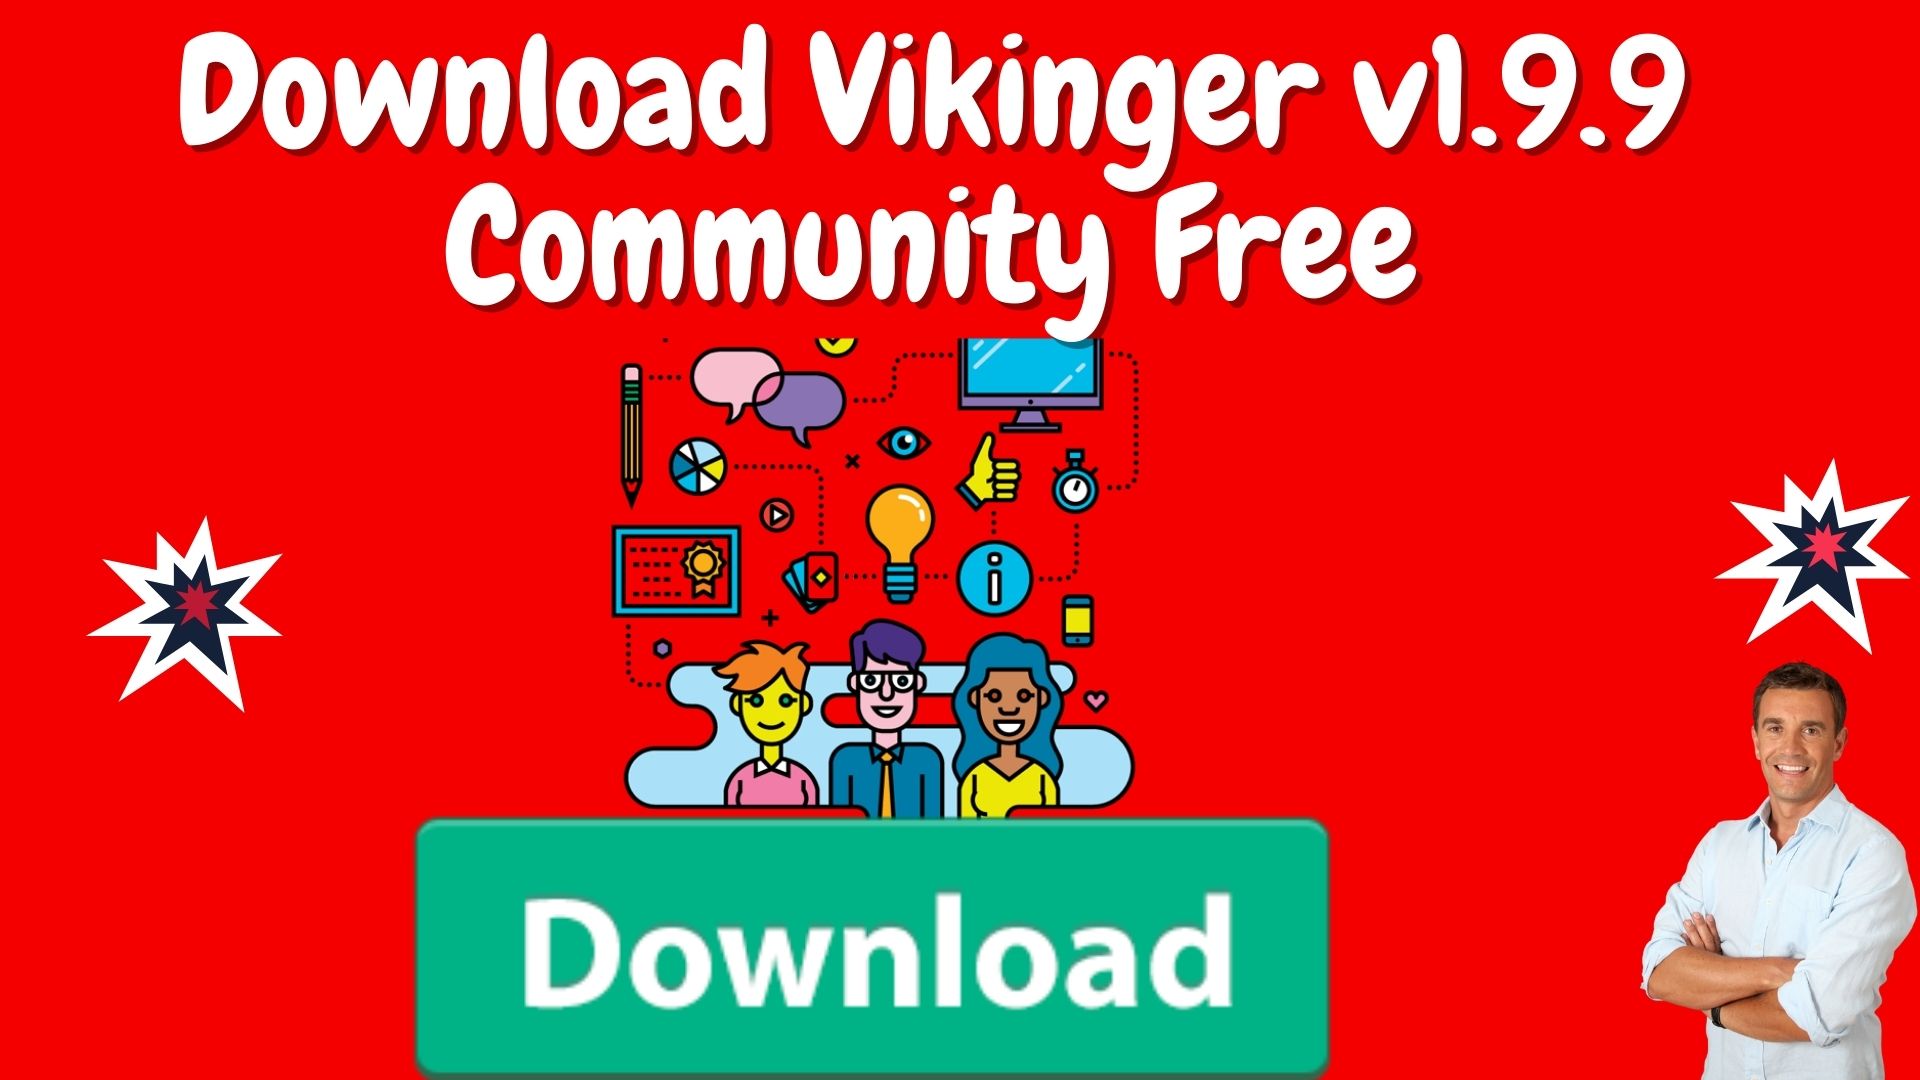 Download vikinger v1. 9. 9 community free